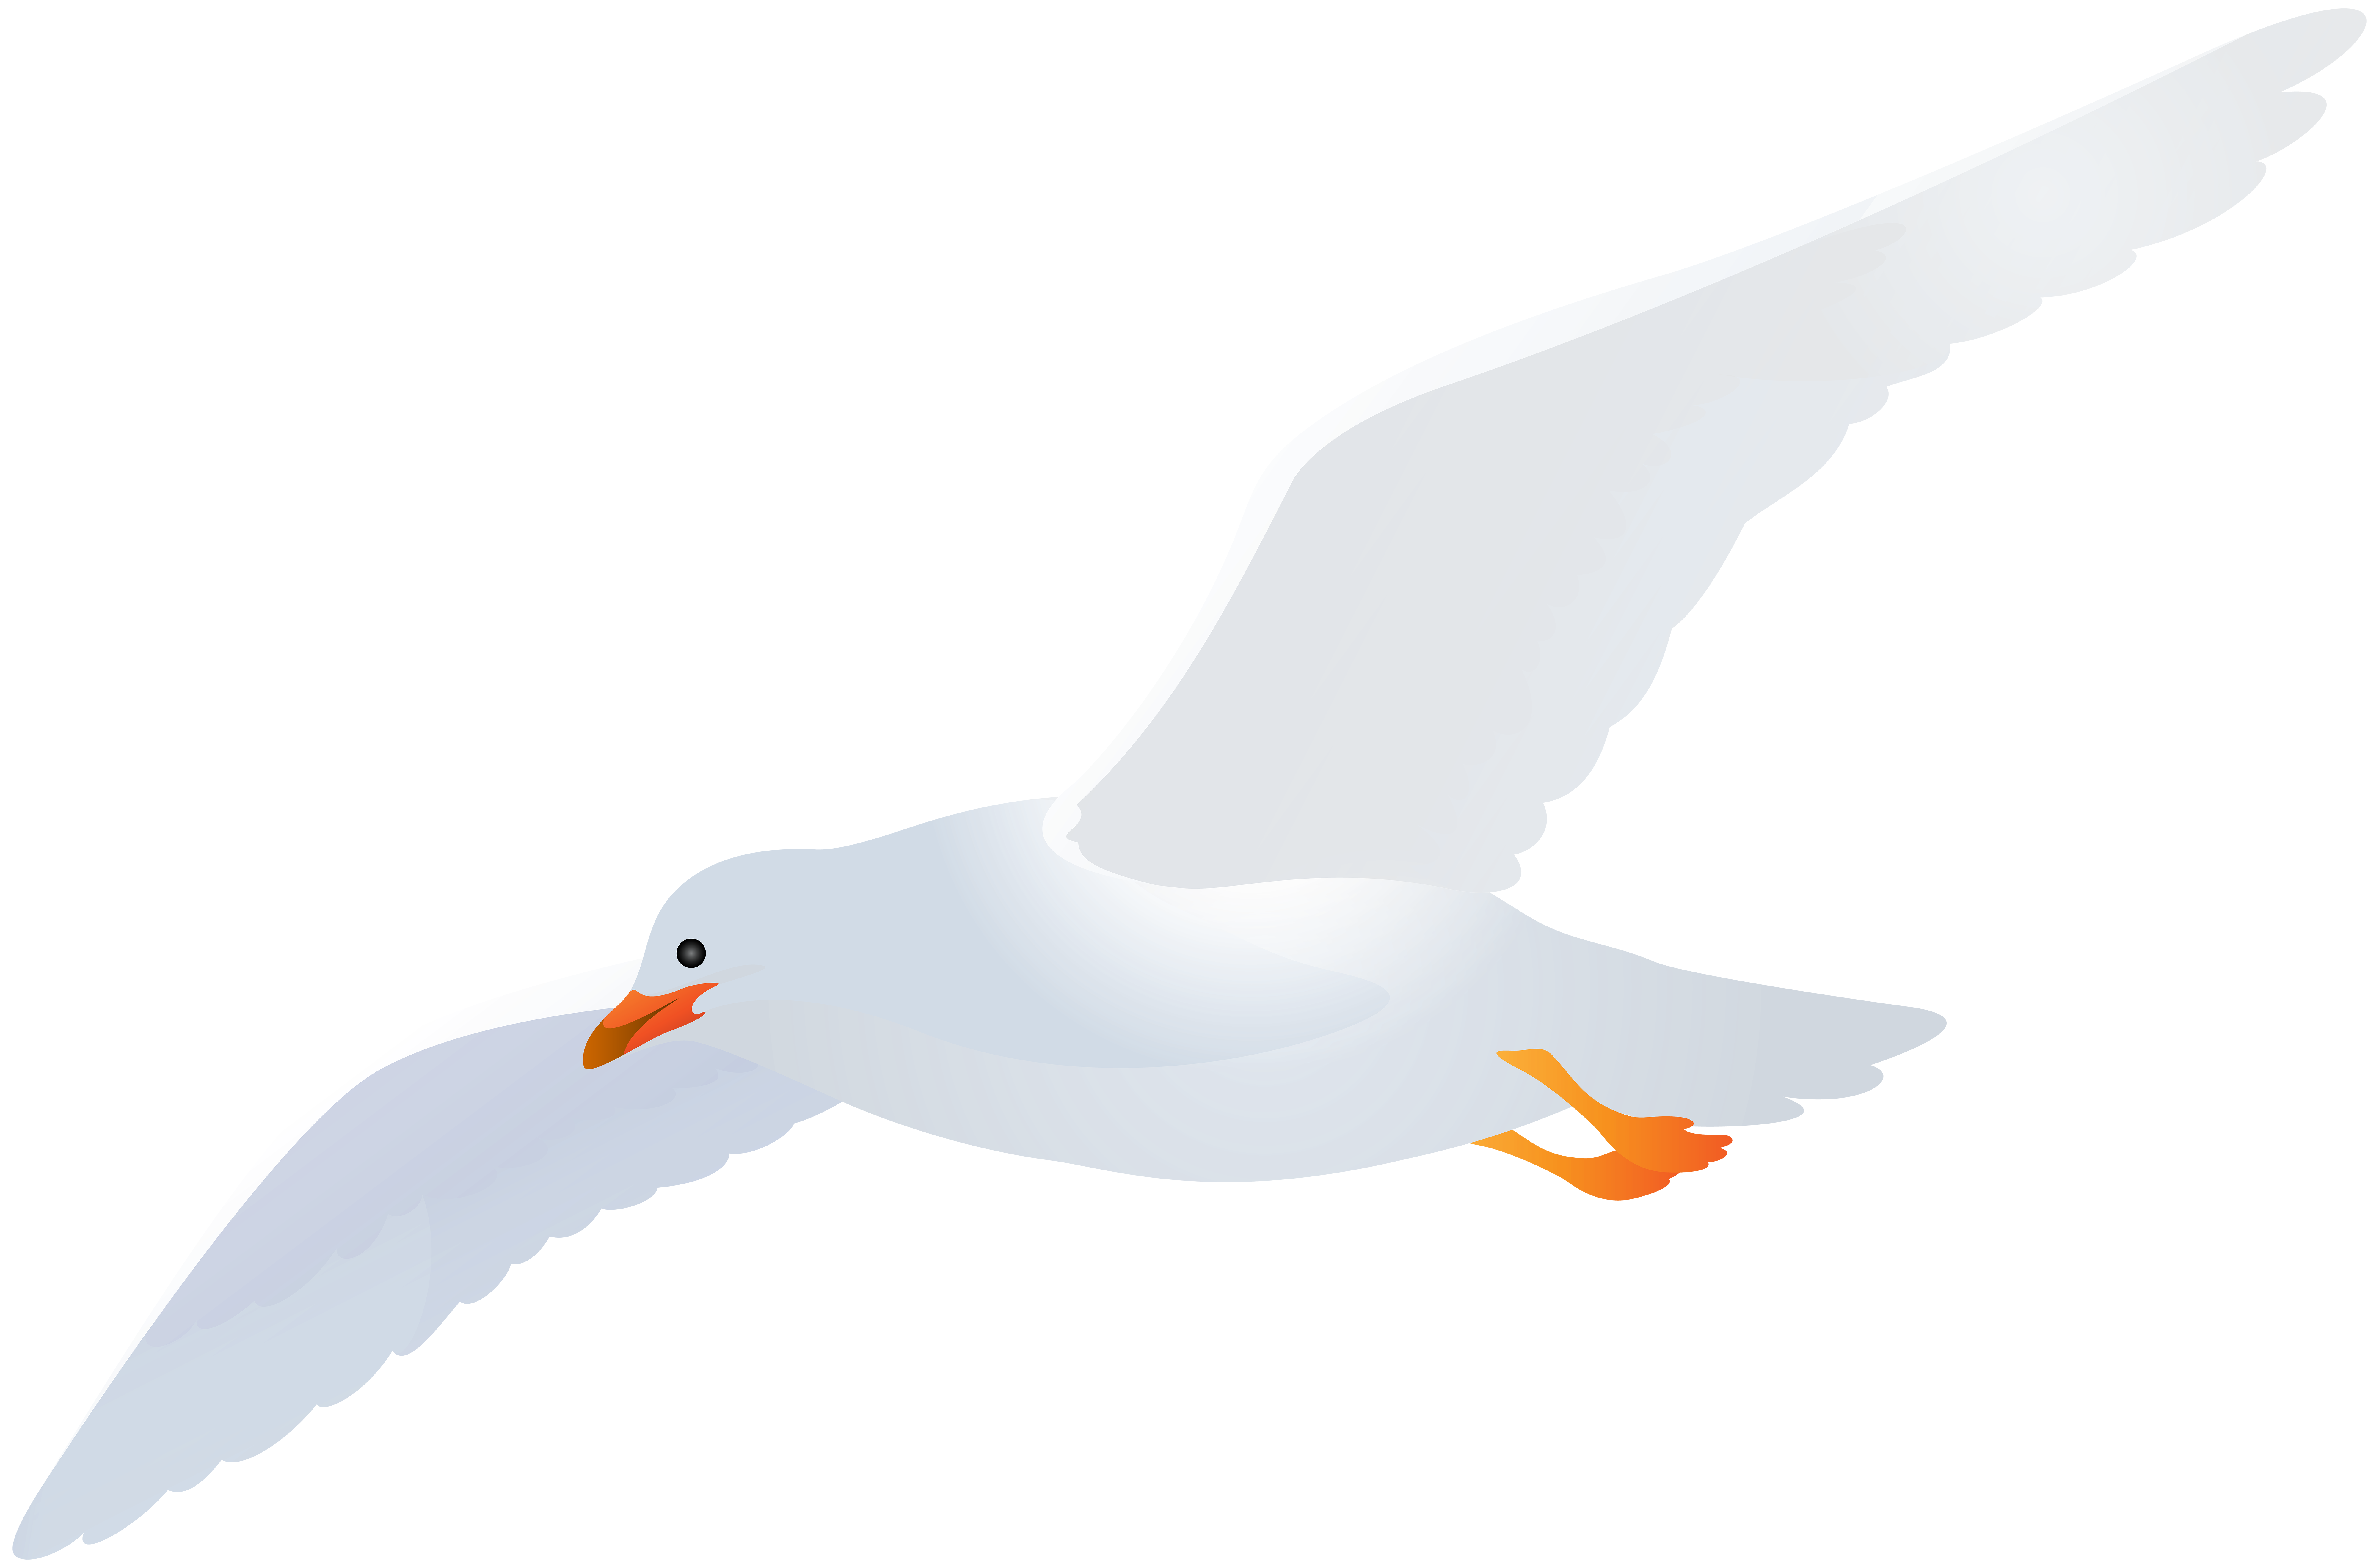 Seagull Transparent Clip Art Image